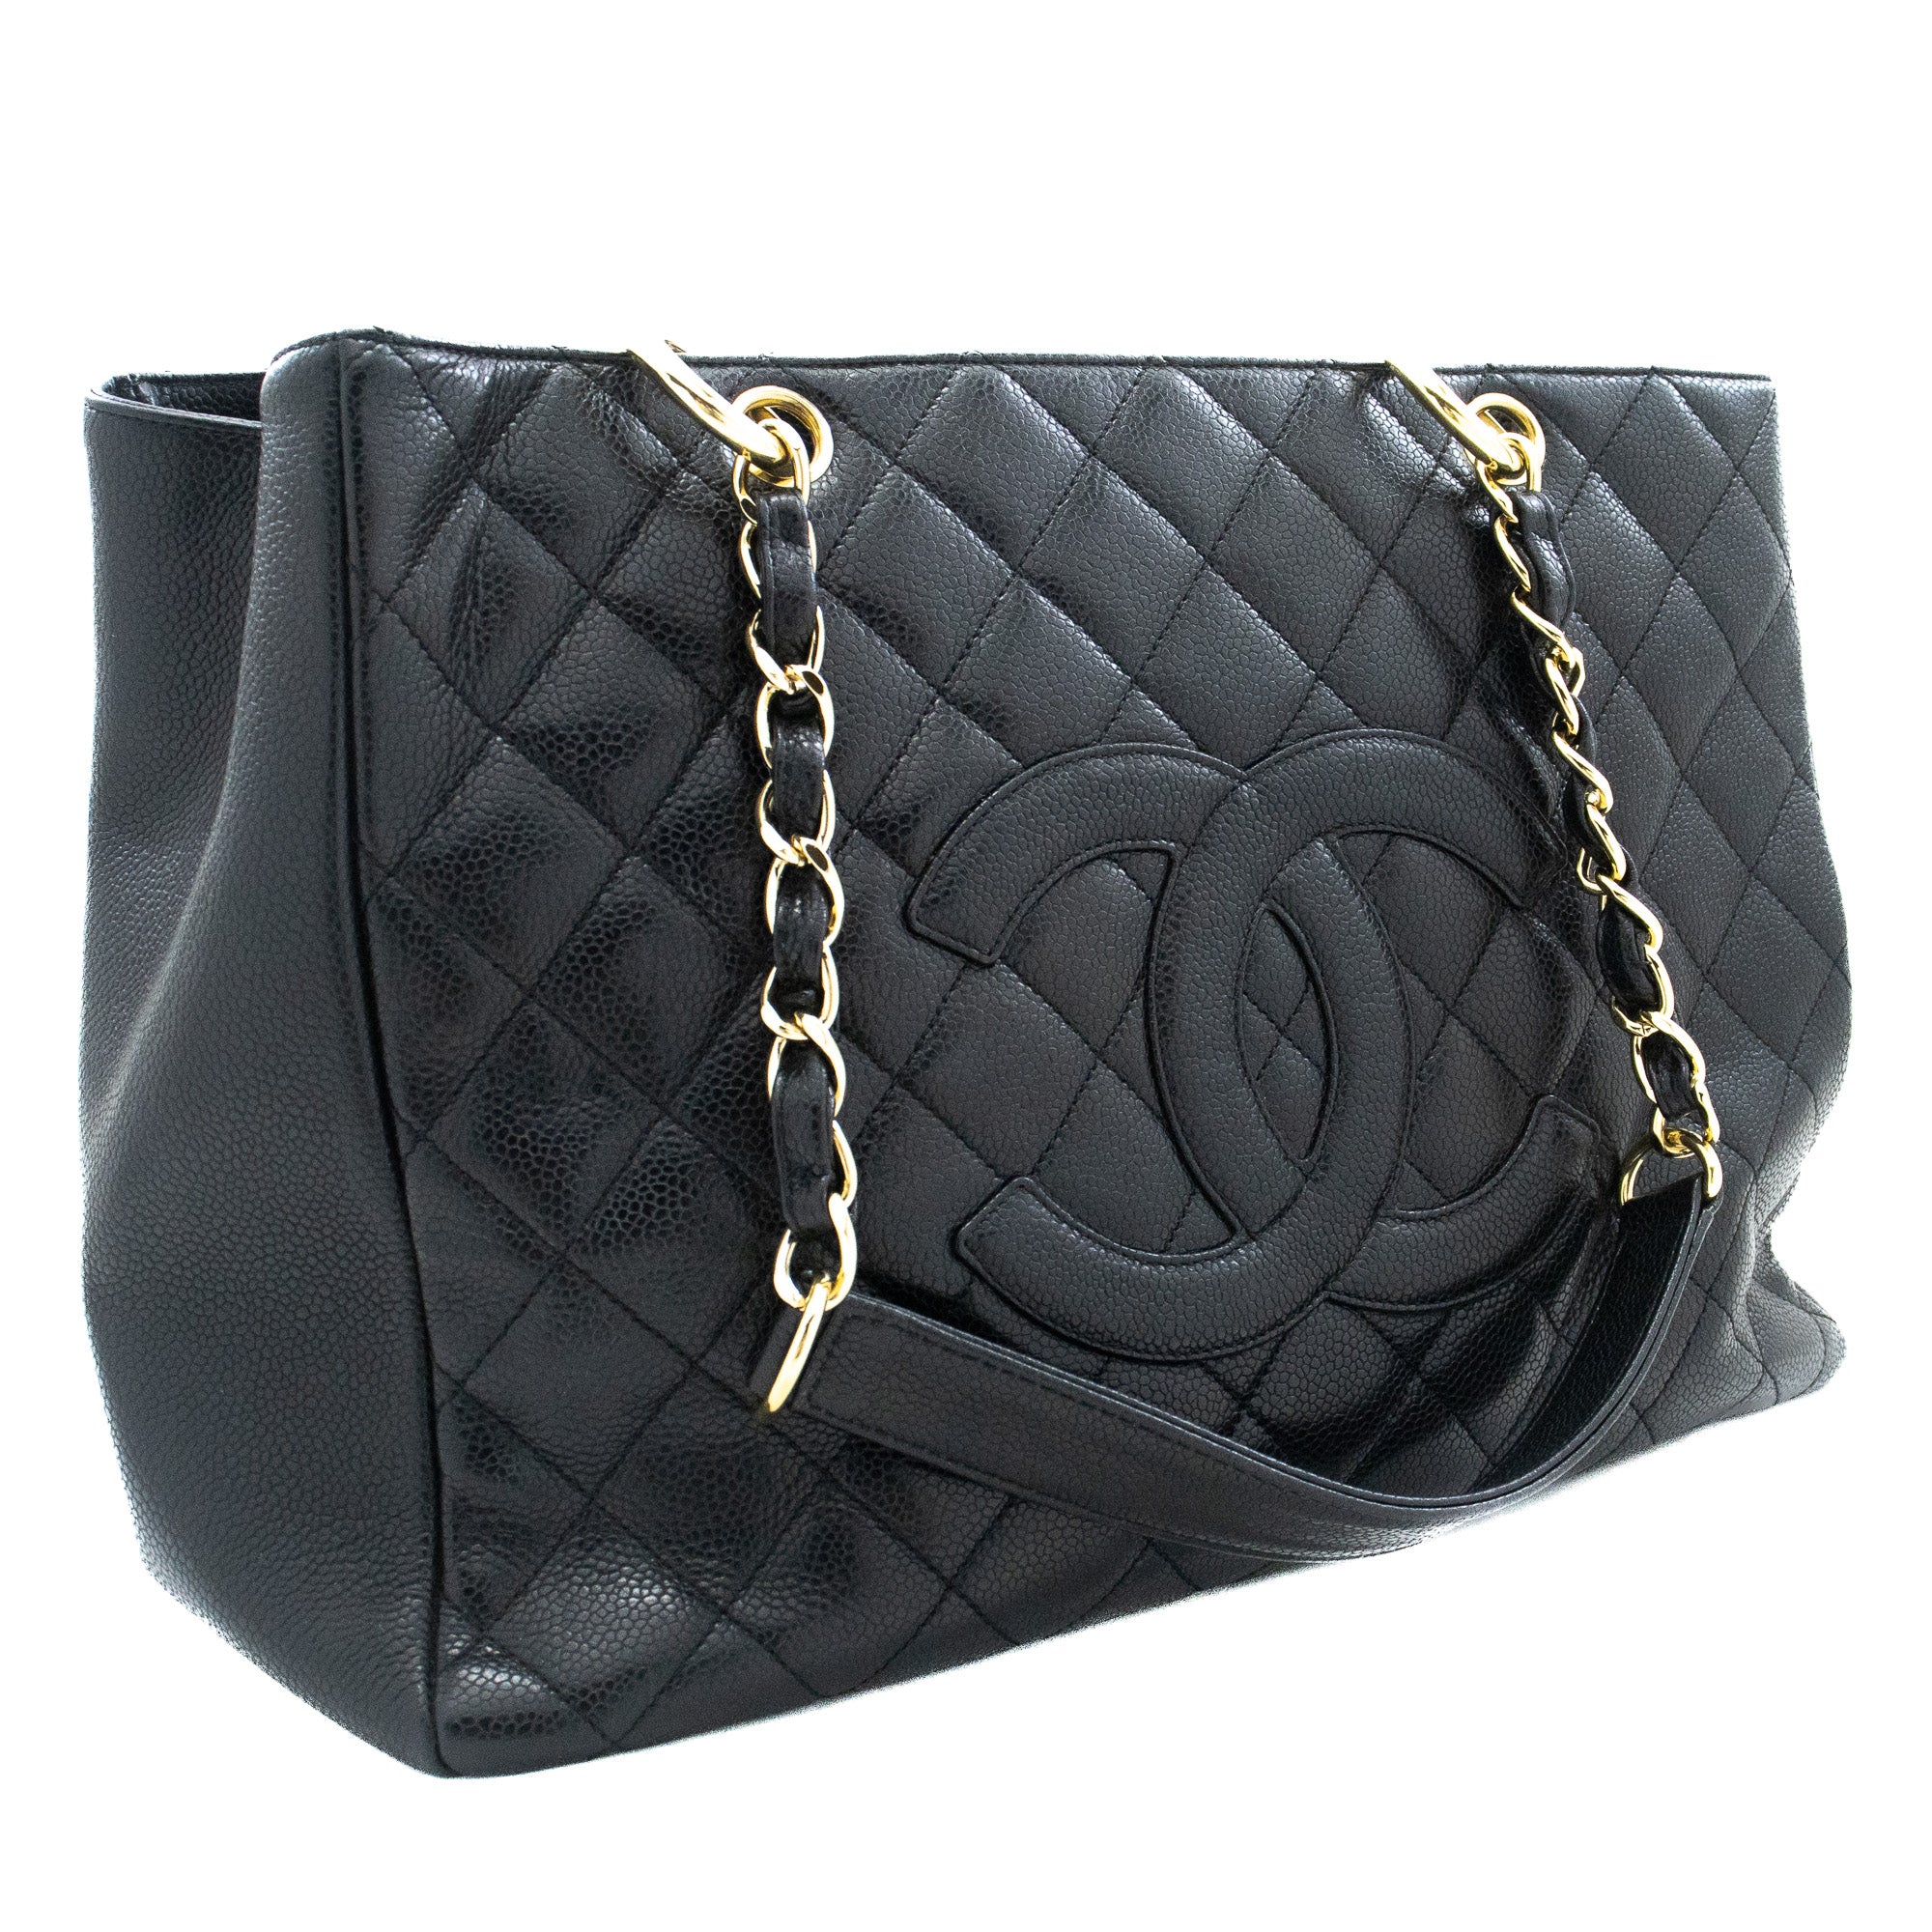 CHANEL vintage CC CC Mark Chain Tote Bag Shoulder Bag Nylon BlackWhite   eBay